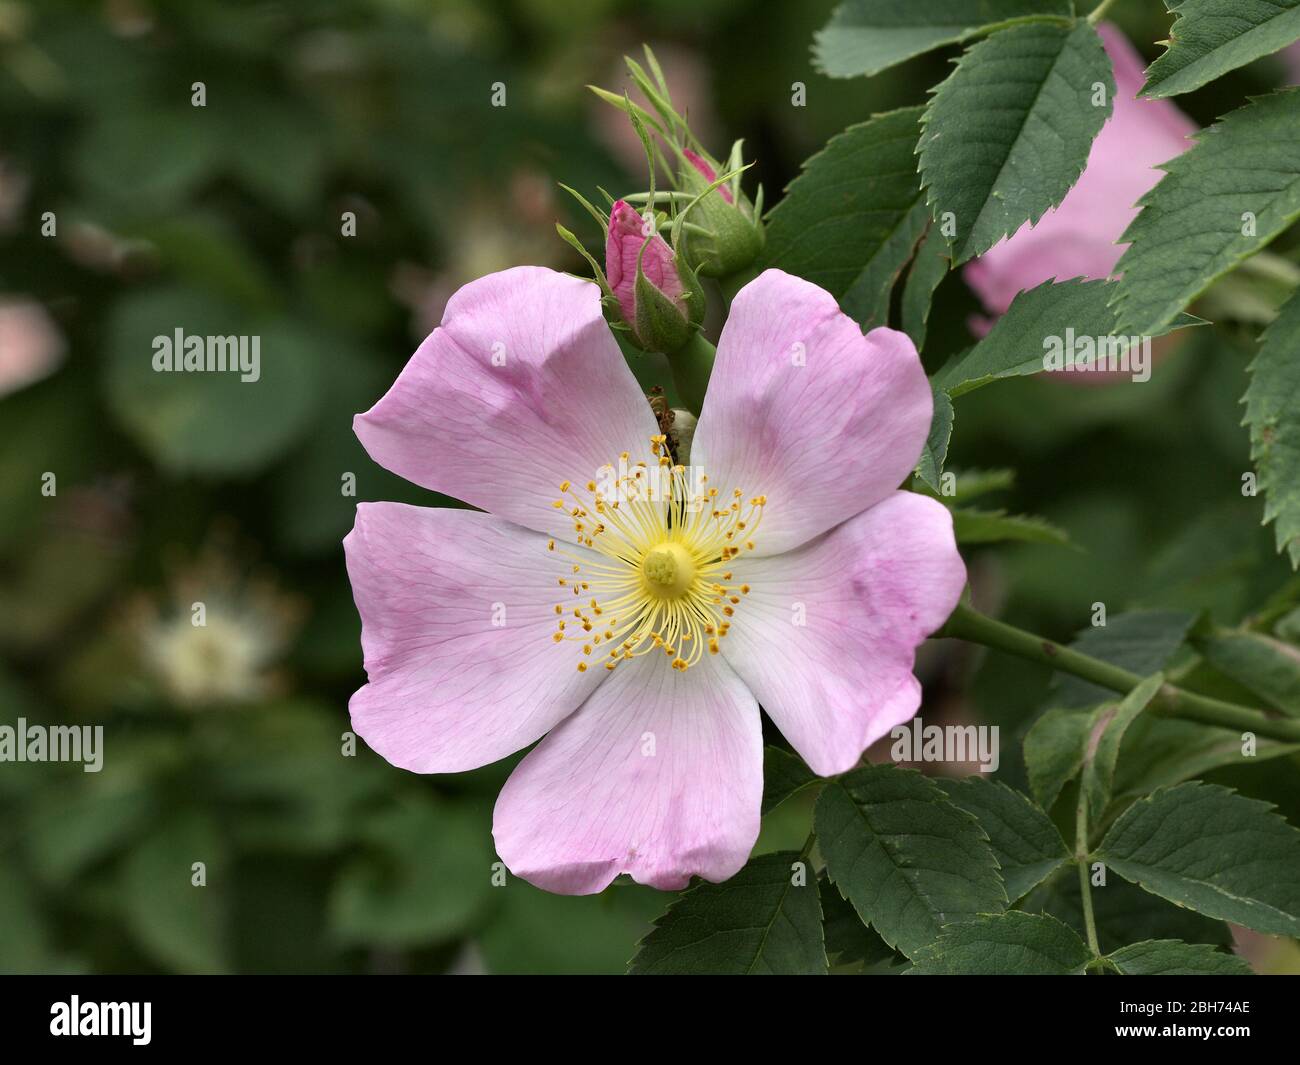 Dog rose blossom. Stock Photo